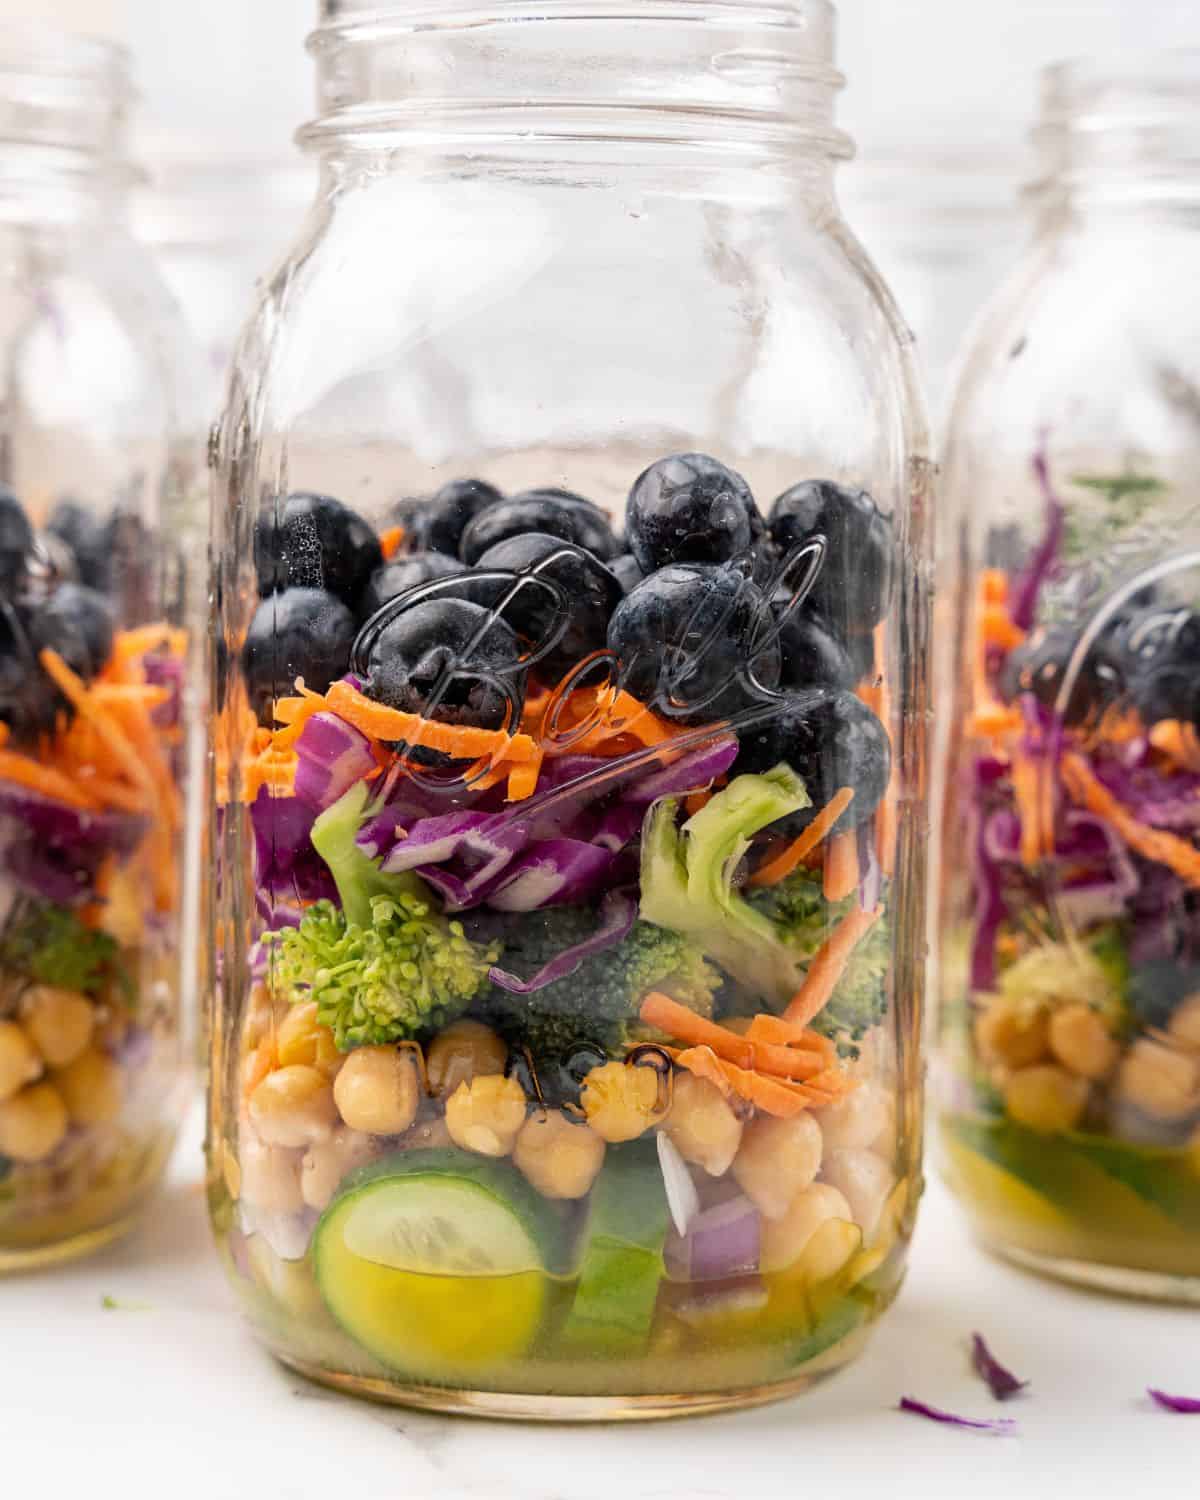 How to Meal Prep Vegan Poke Salad Jars - garden grub